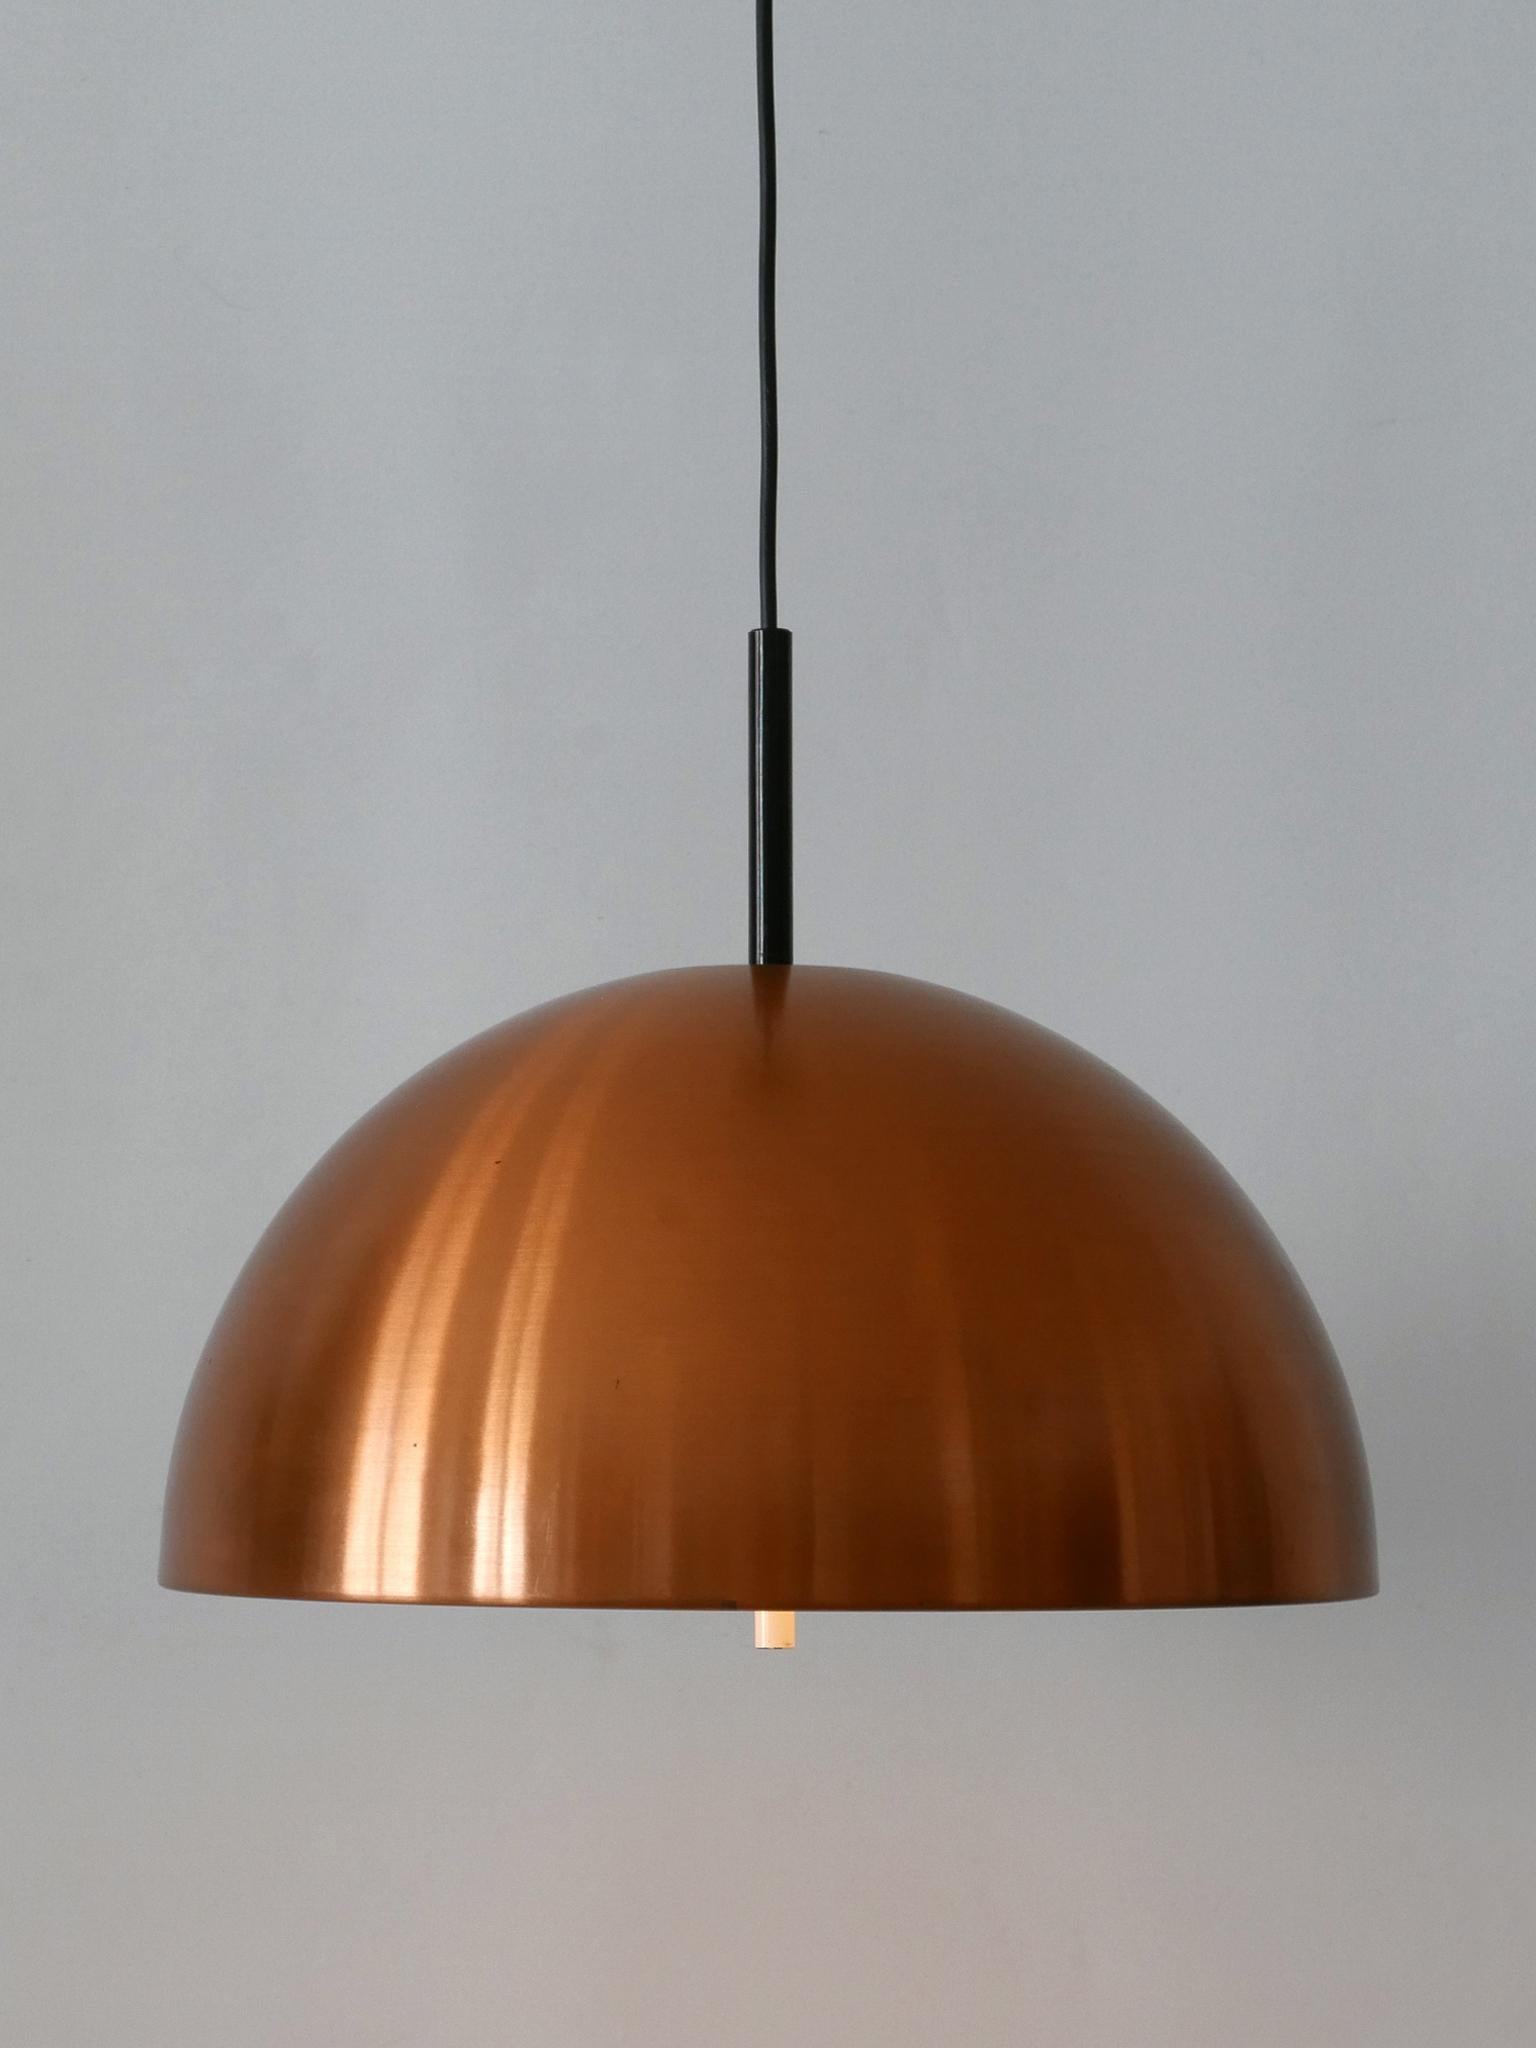 Elegant Mid-Century Modern Copper Pendant Lamp by Staff & Schwarz Germany 1960s For Sale 10